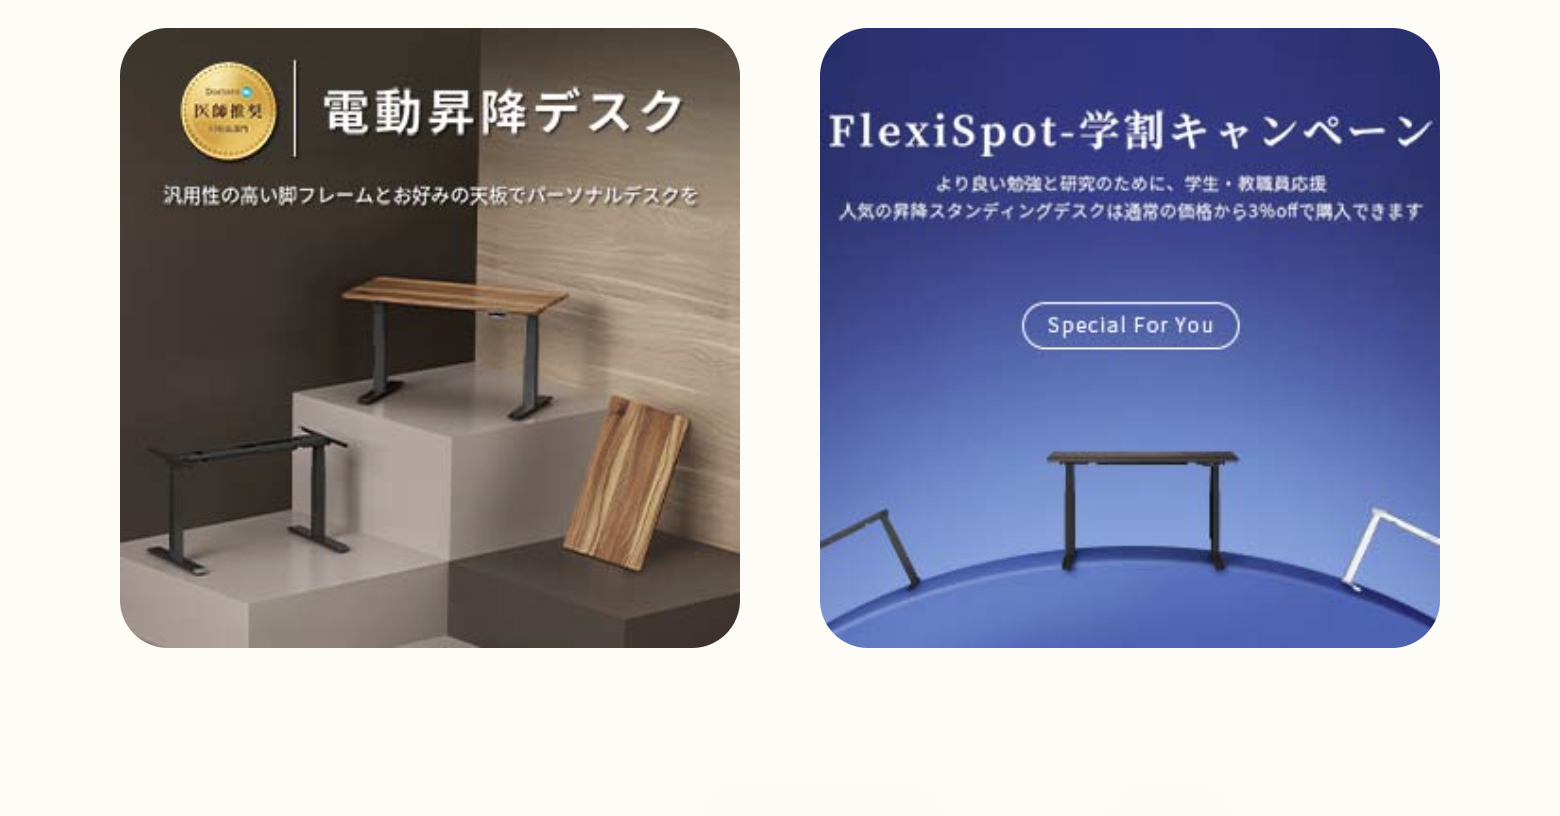 FlexiSpot学割キャンペーン